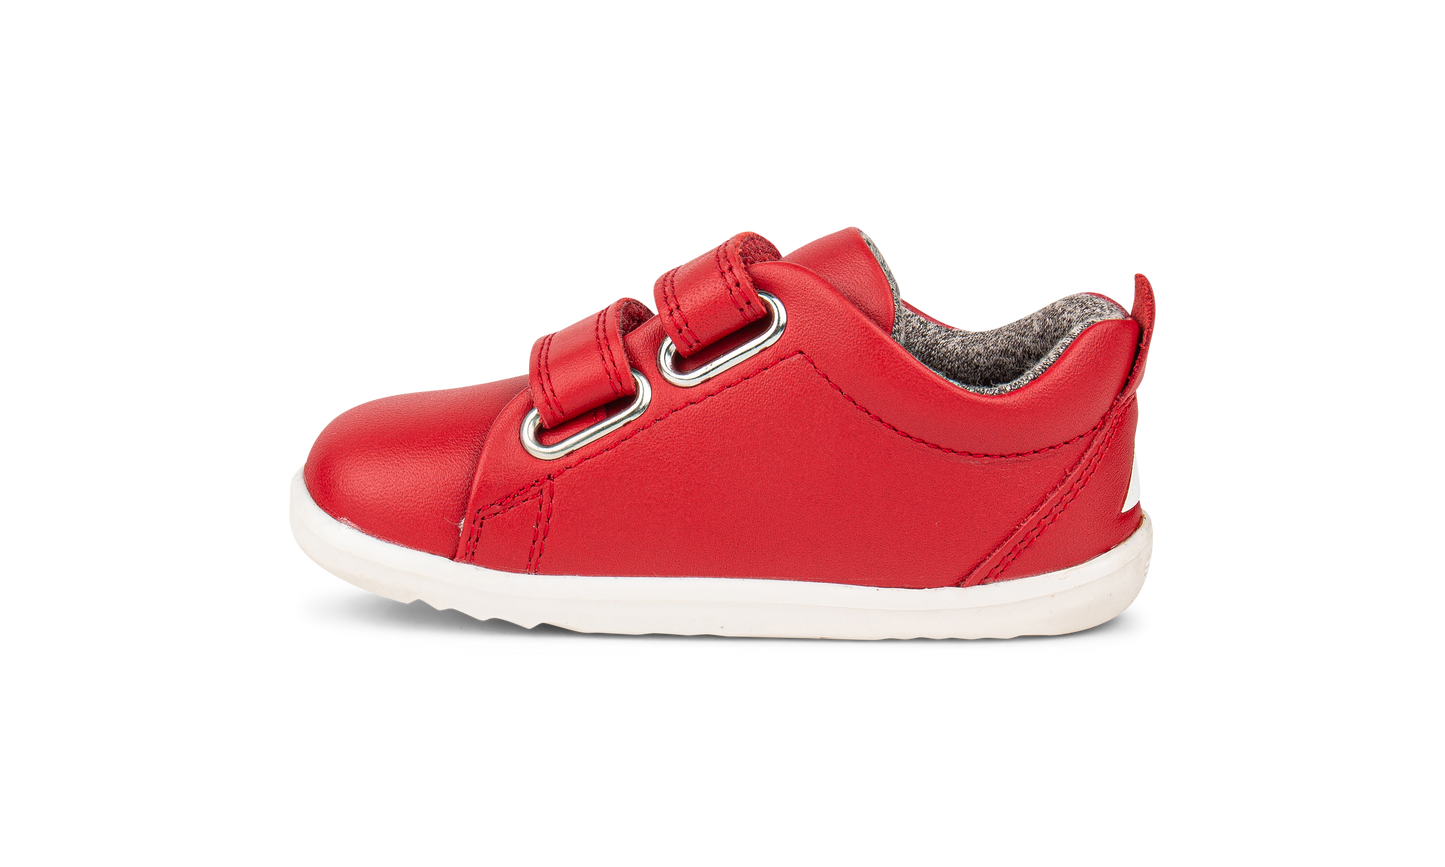 SU Grass Court Shoe in Red